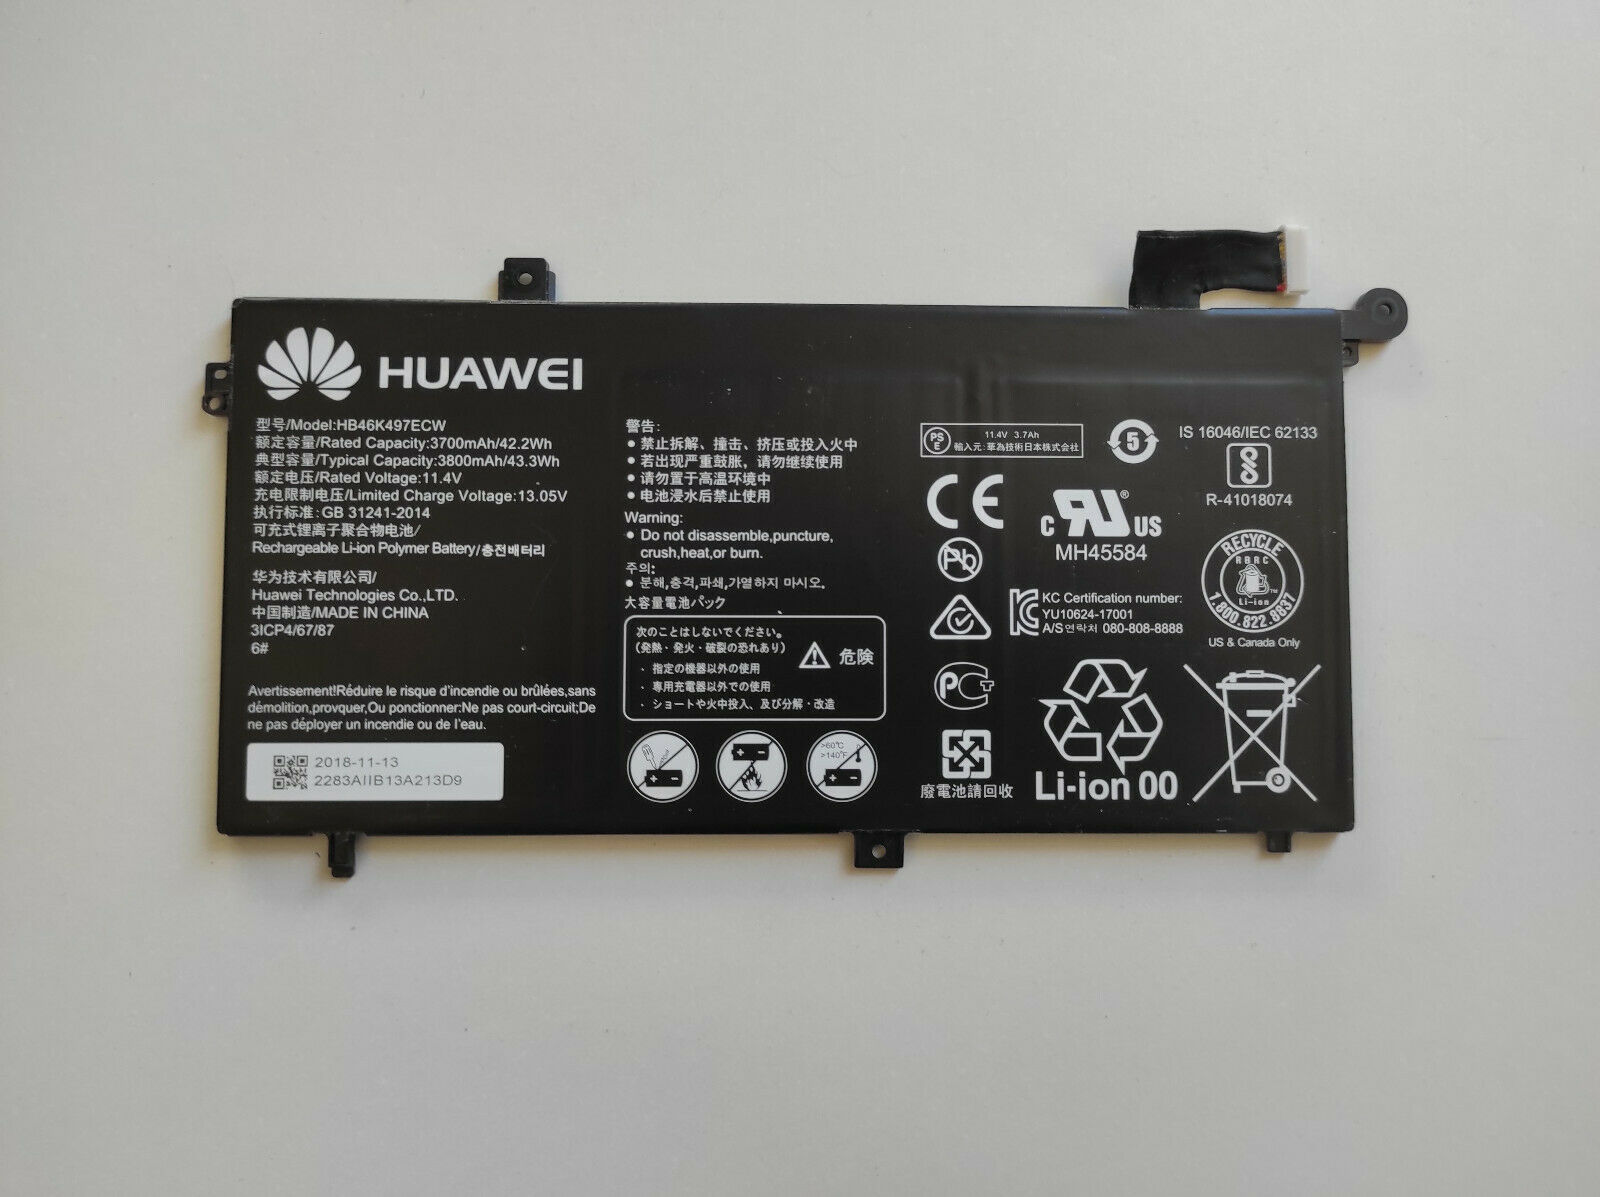 42.2Wh Huawei MateBook D(i7/8G/128G 1TB) Battery [US-HB46K497ECW-12]